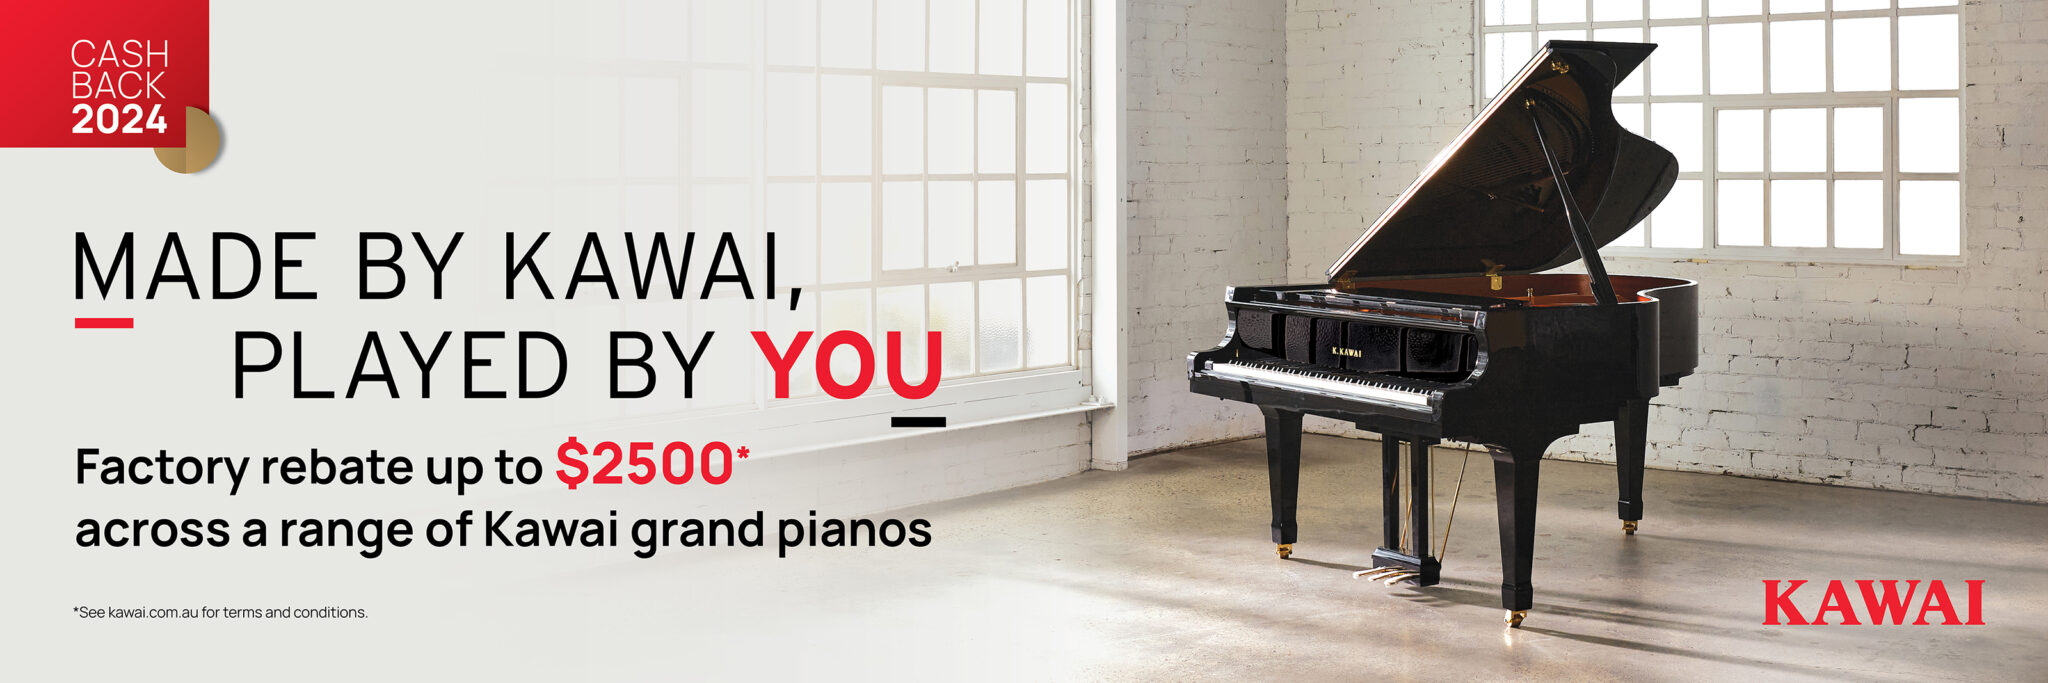 Kawai grand piano cashback 2024